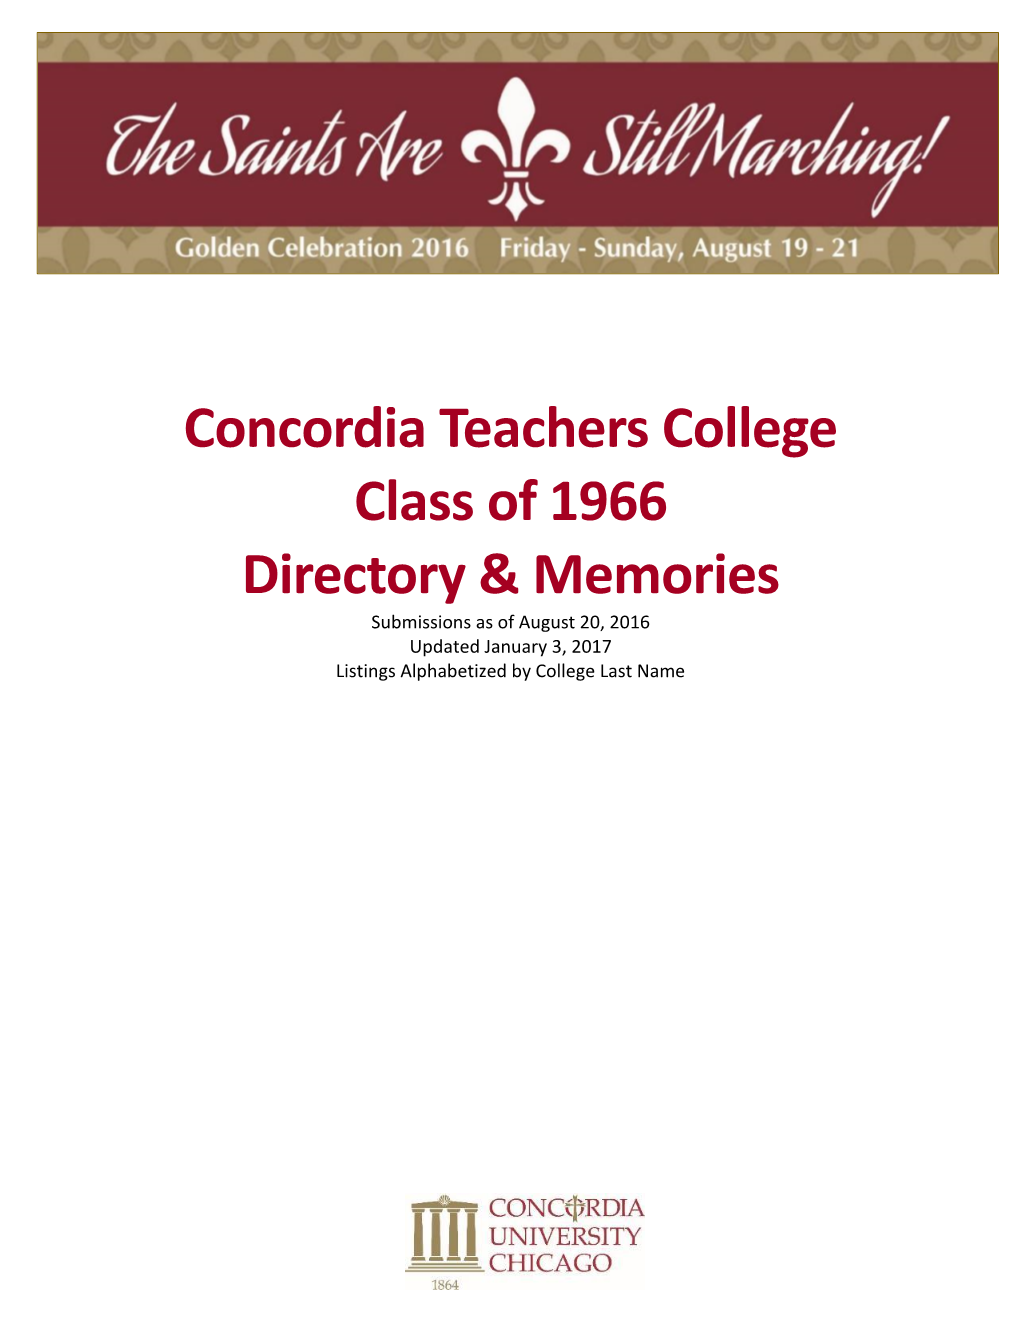 Concordia Teachers College Class of 1966 Directory & Memories